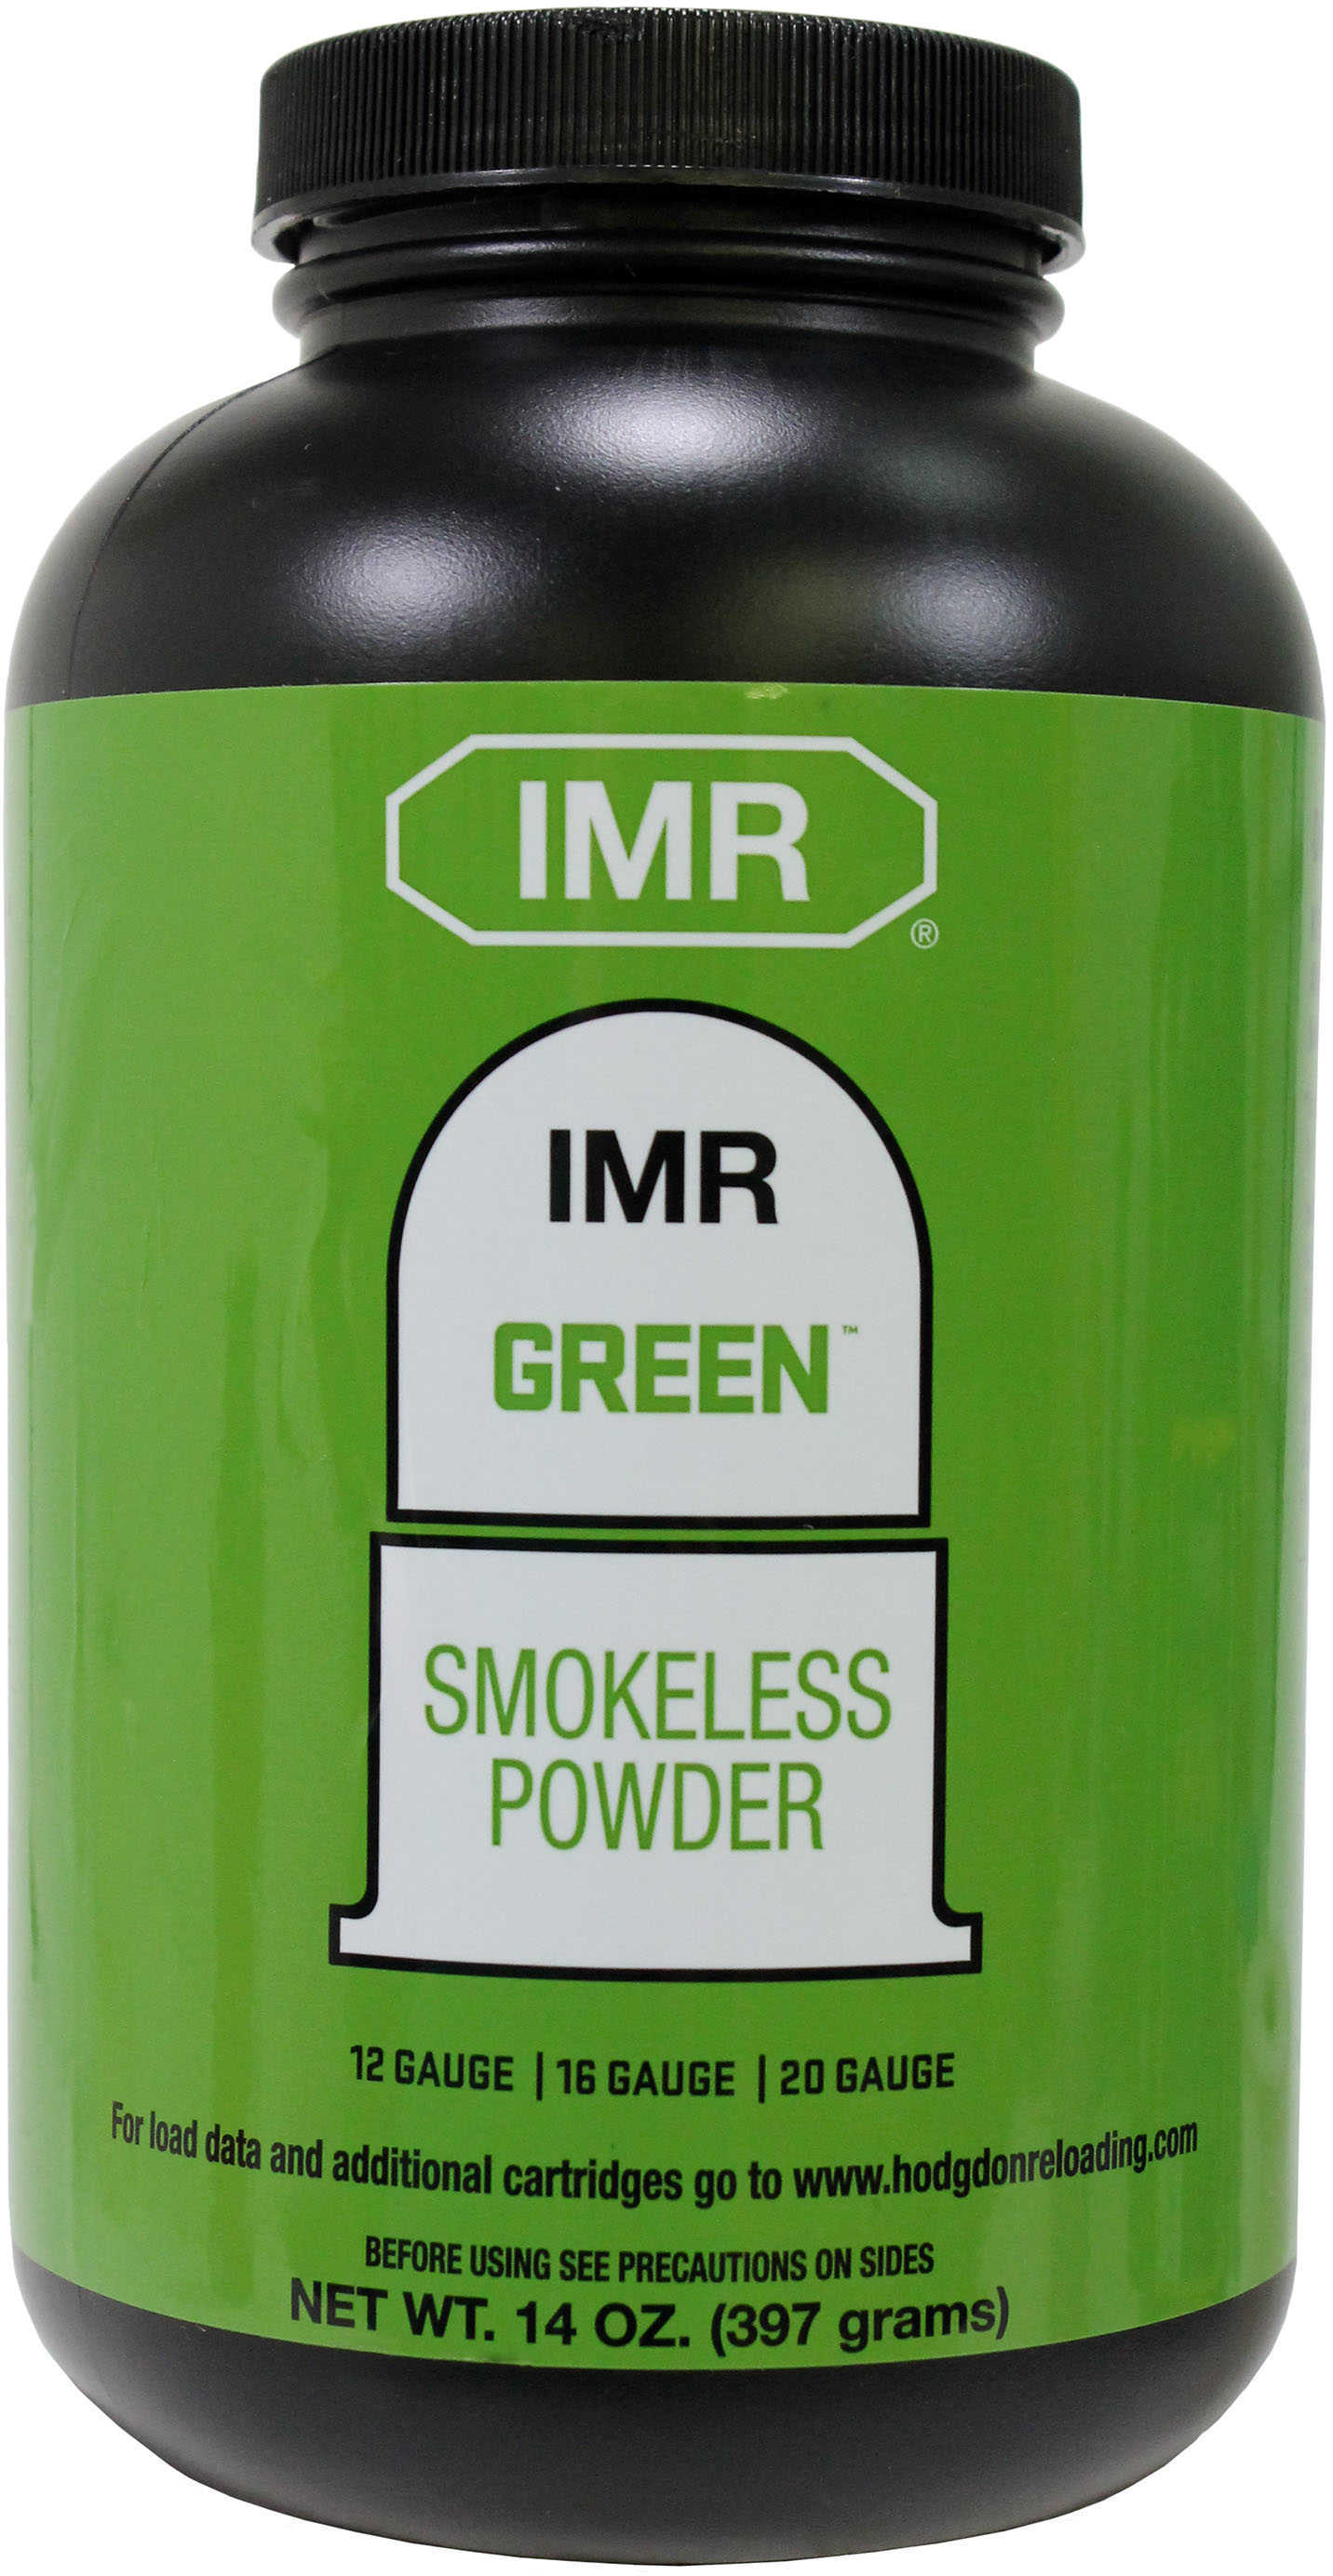 IMR Smokeless Powder Green 1 Lb